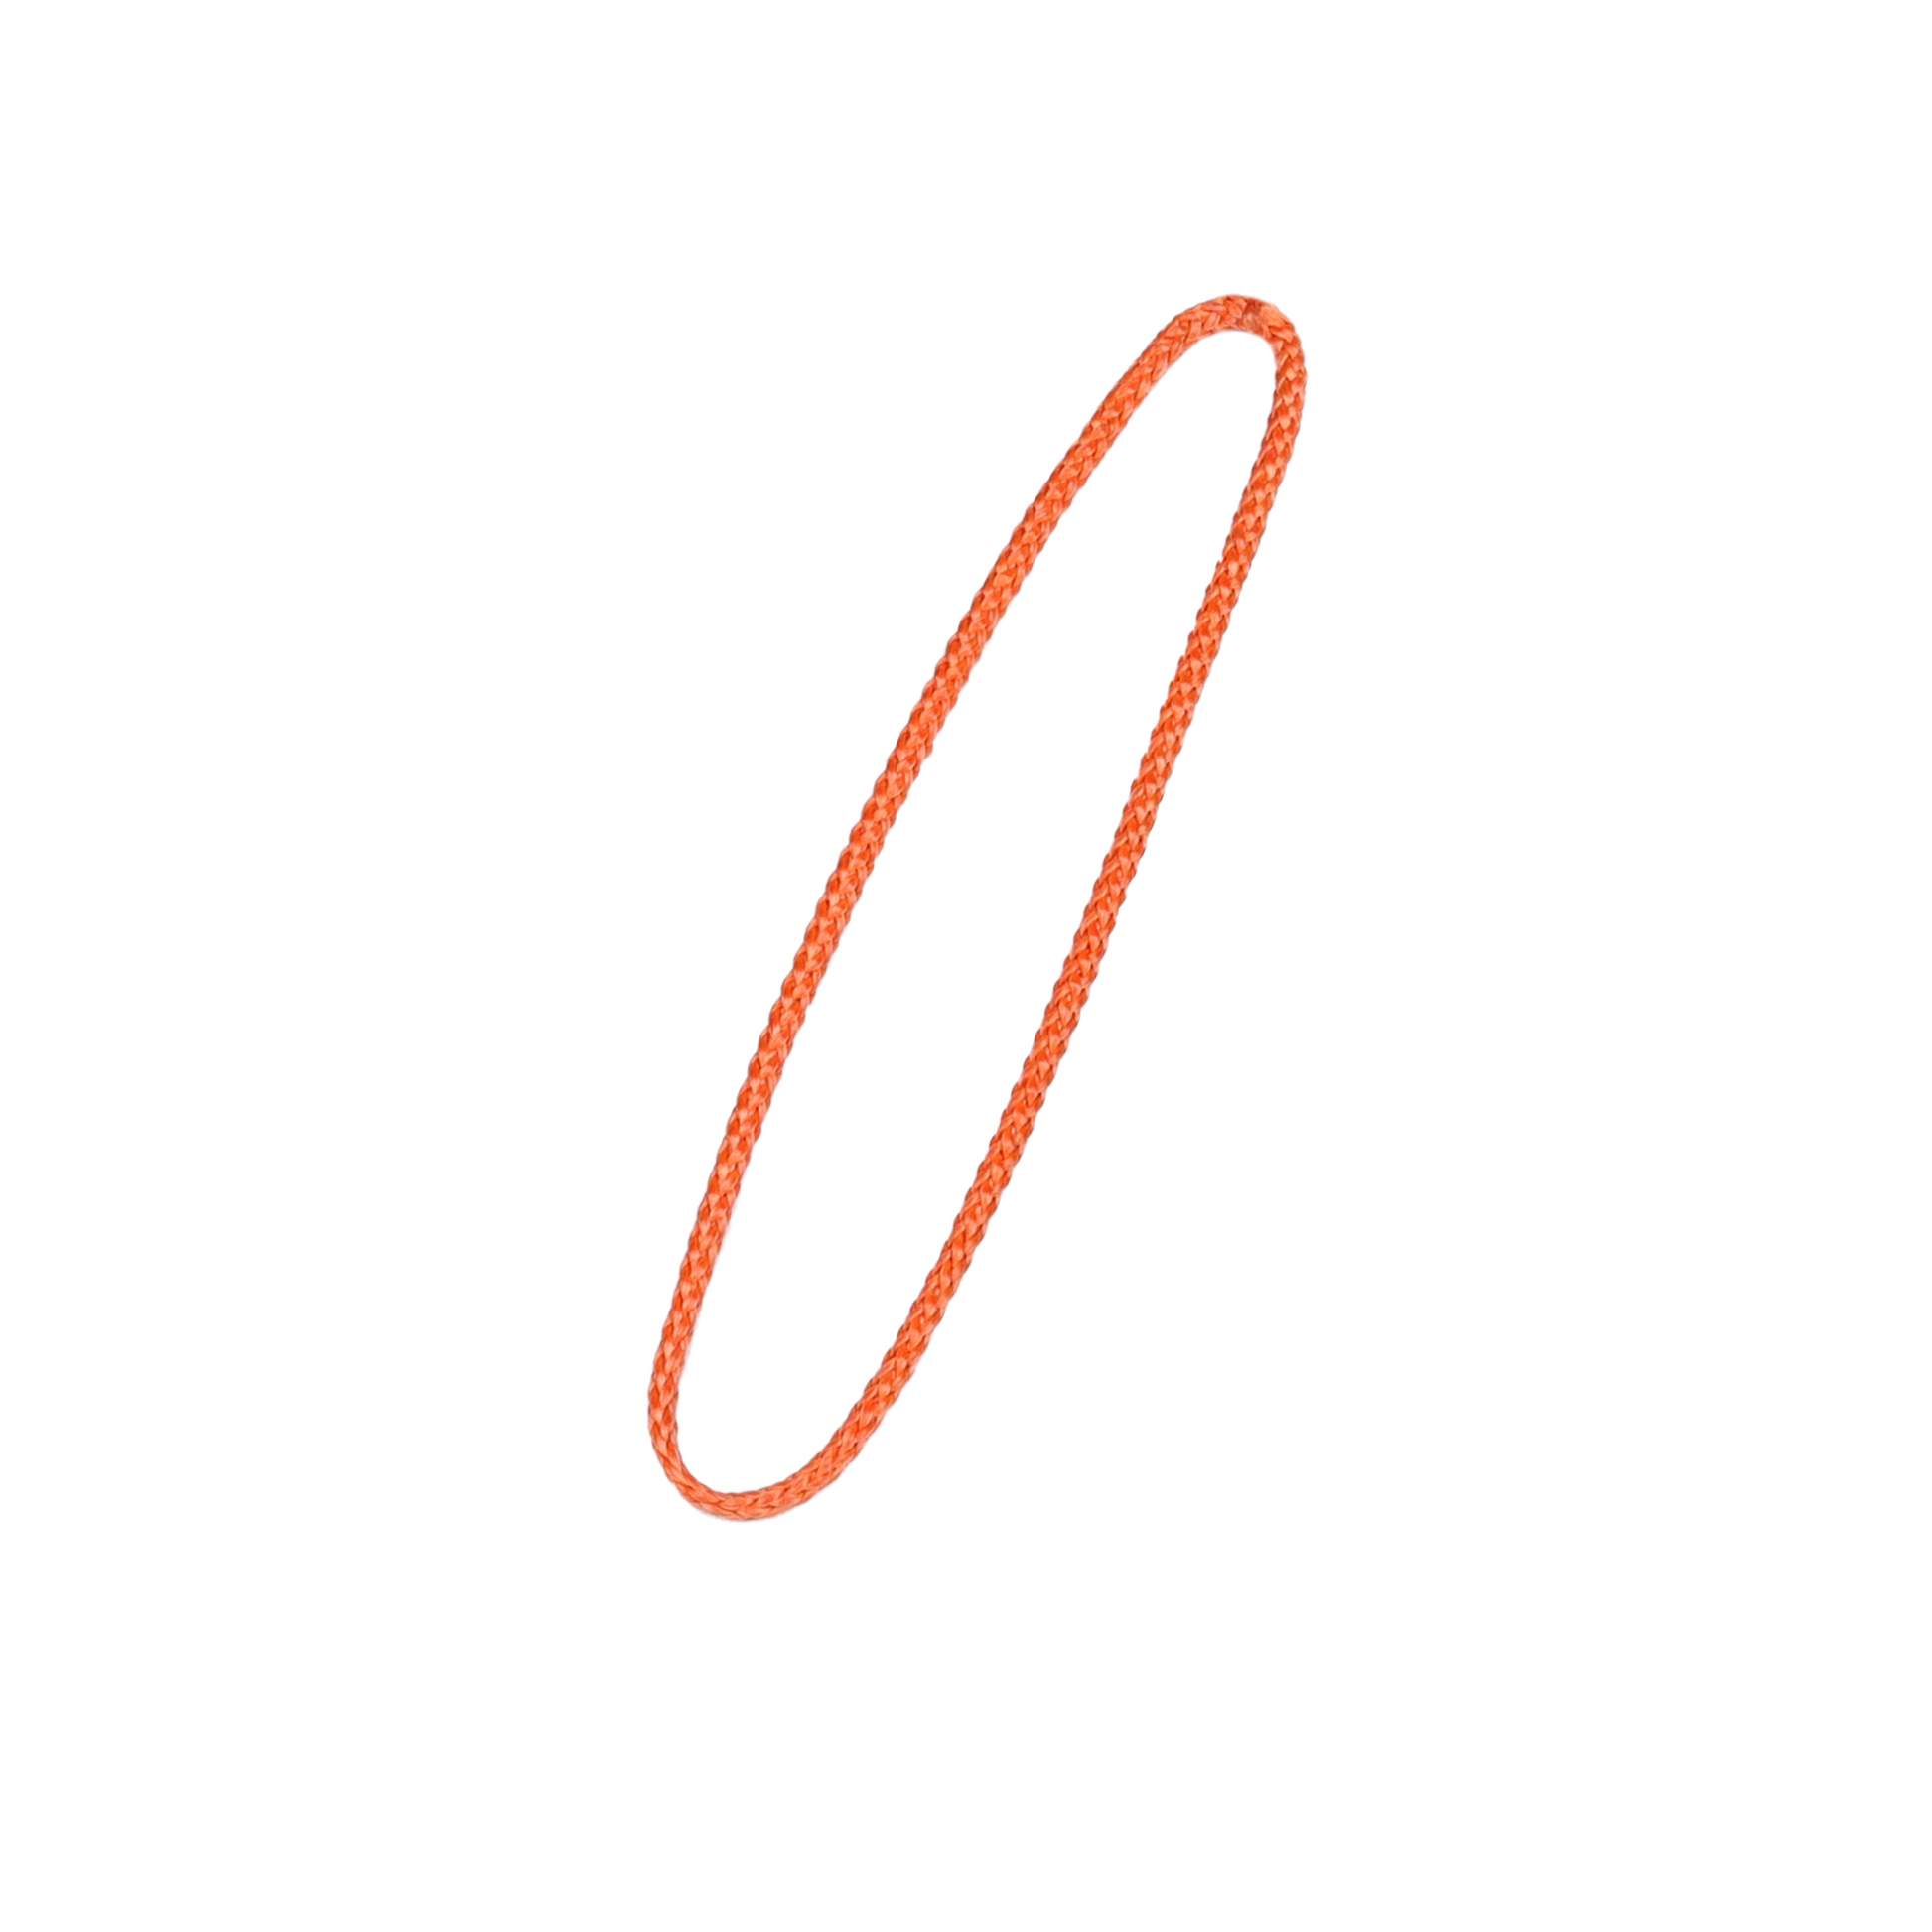 Amsteel Continuous Loop Orange